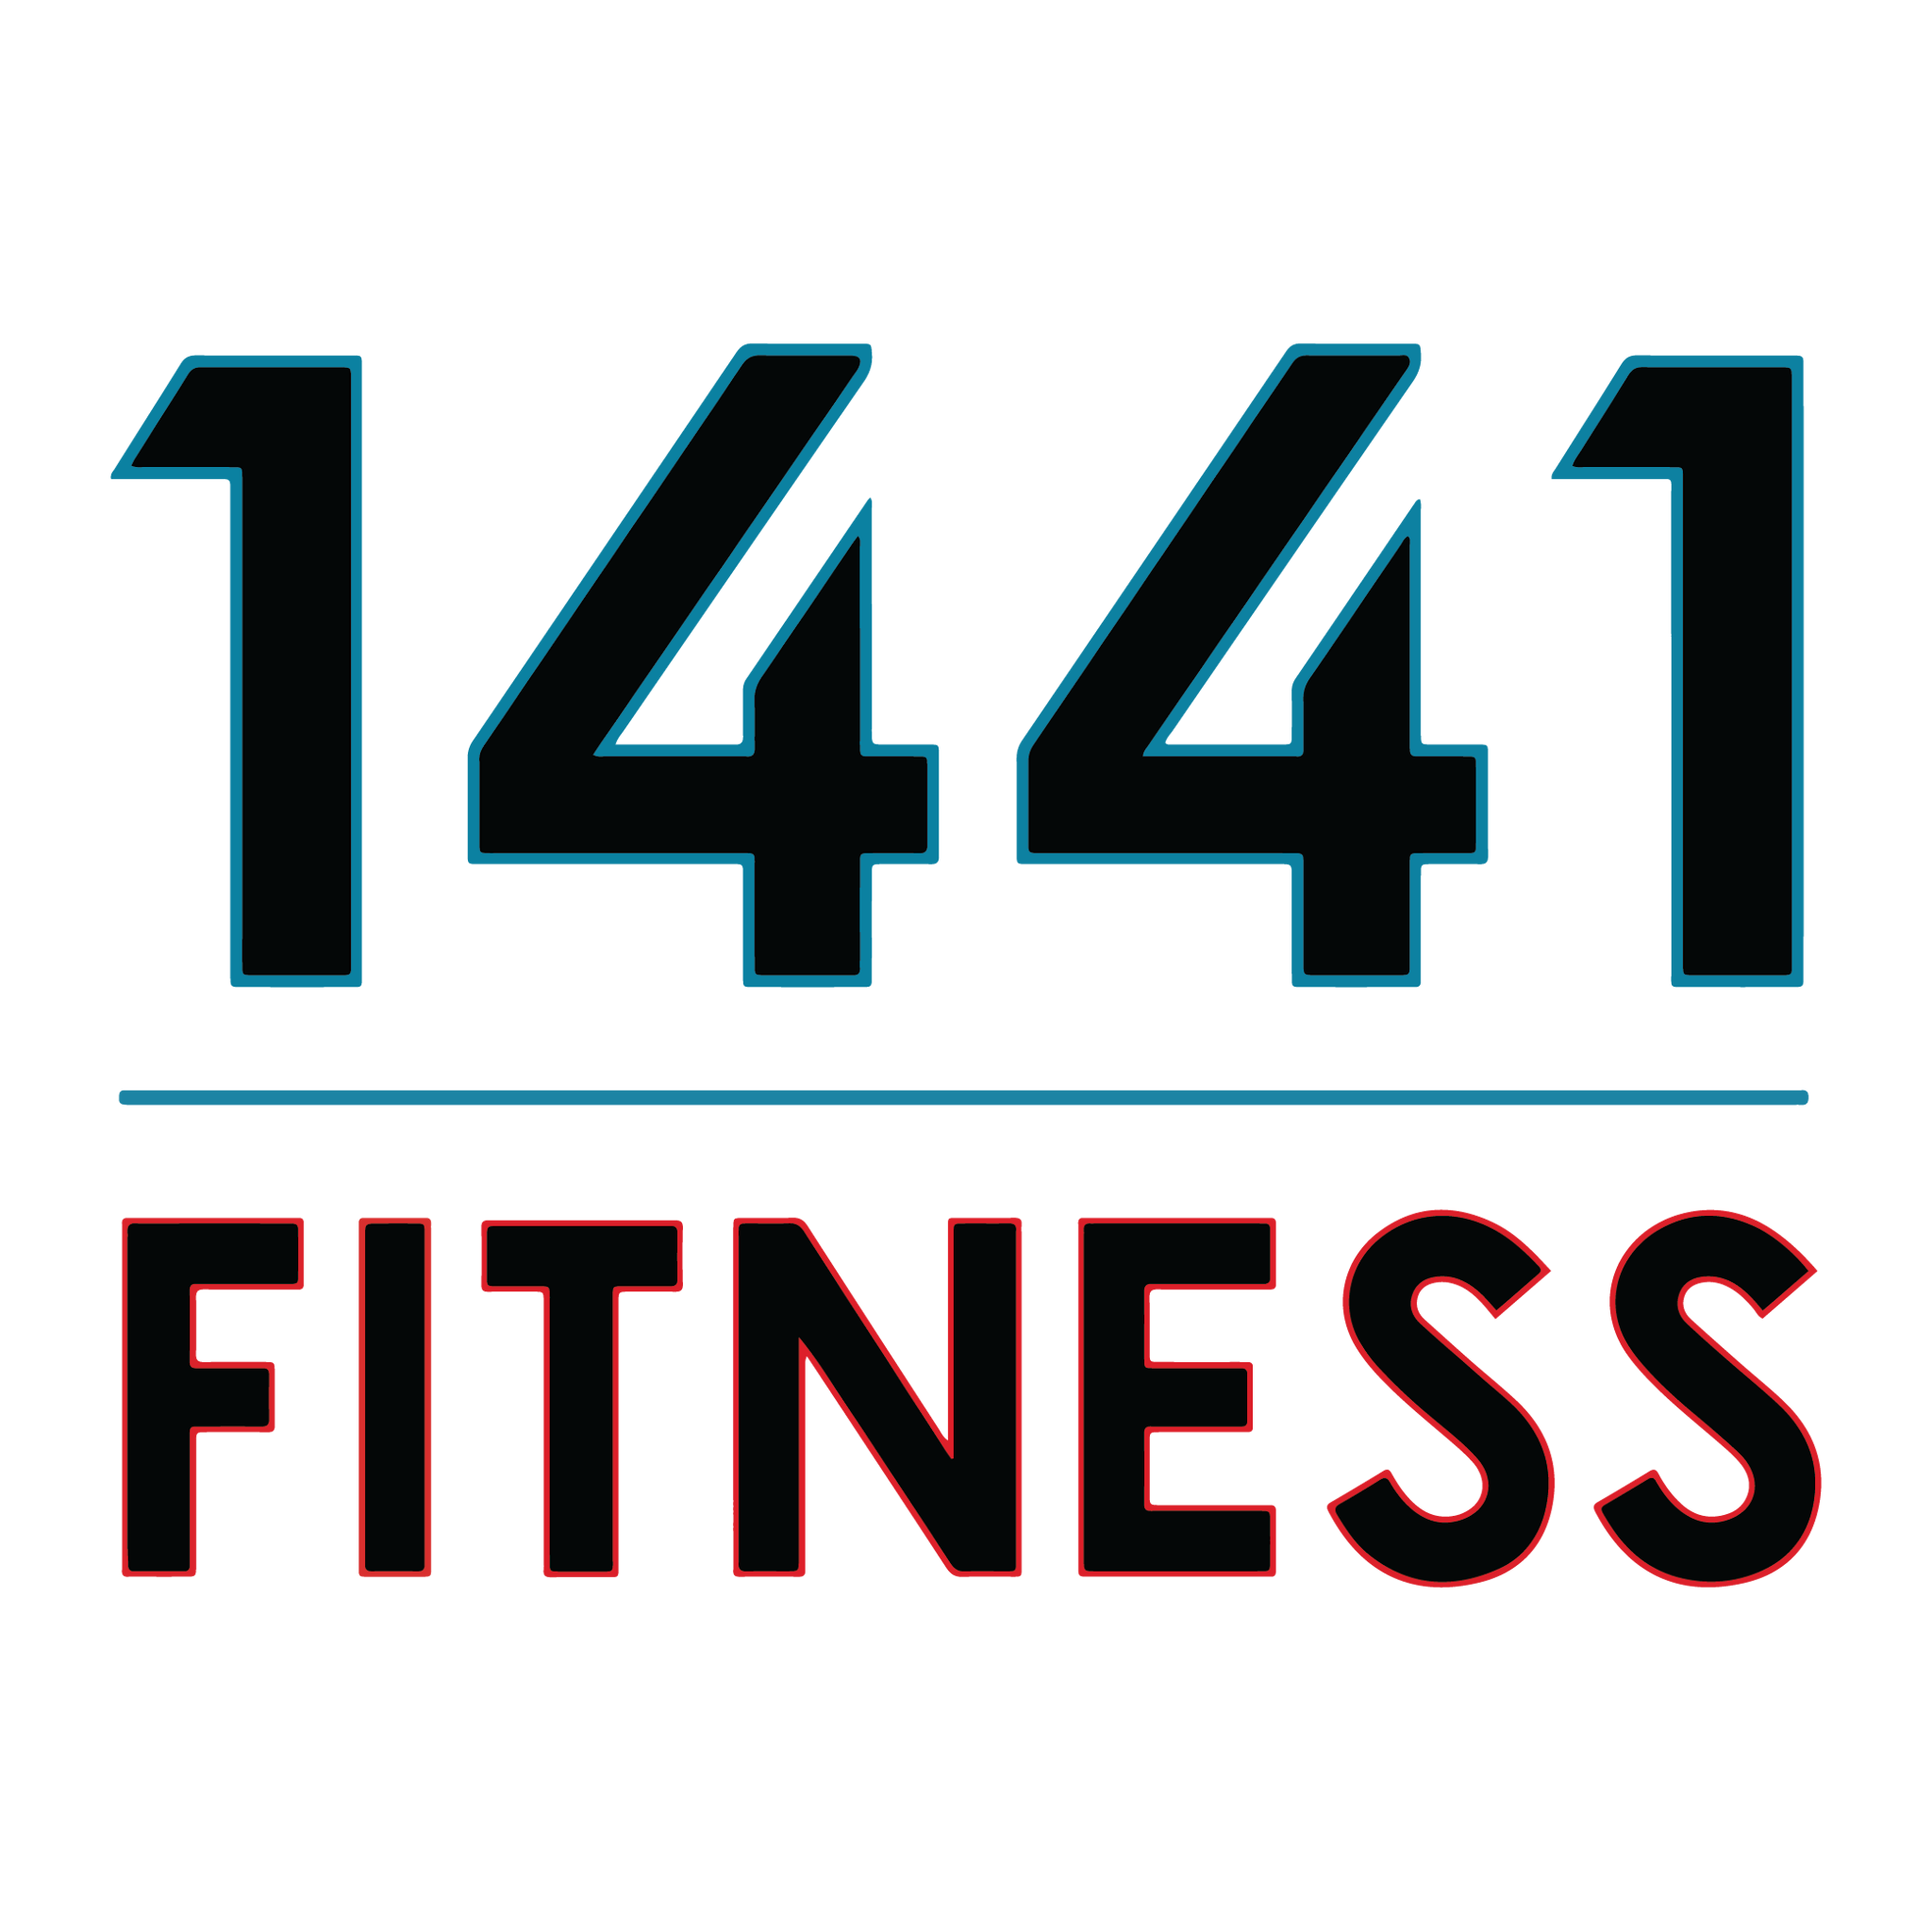 1441 Fitness Brand Logo